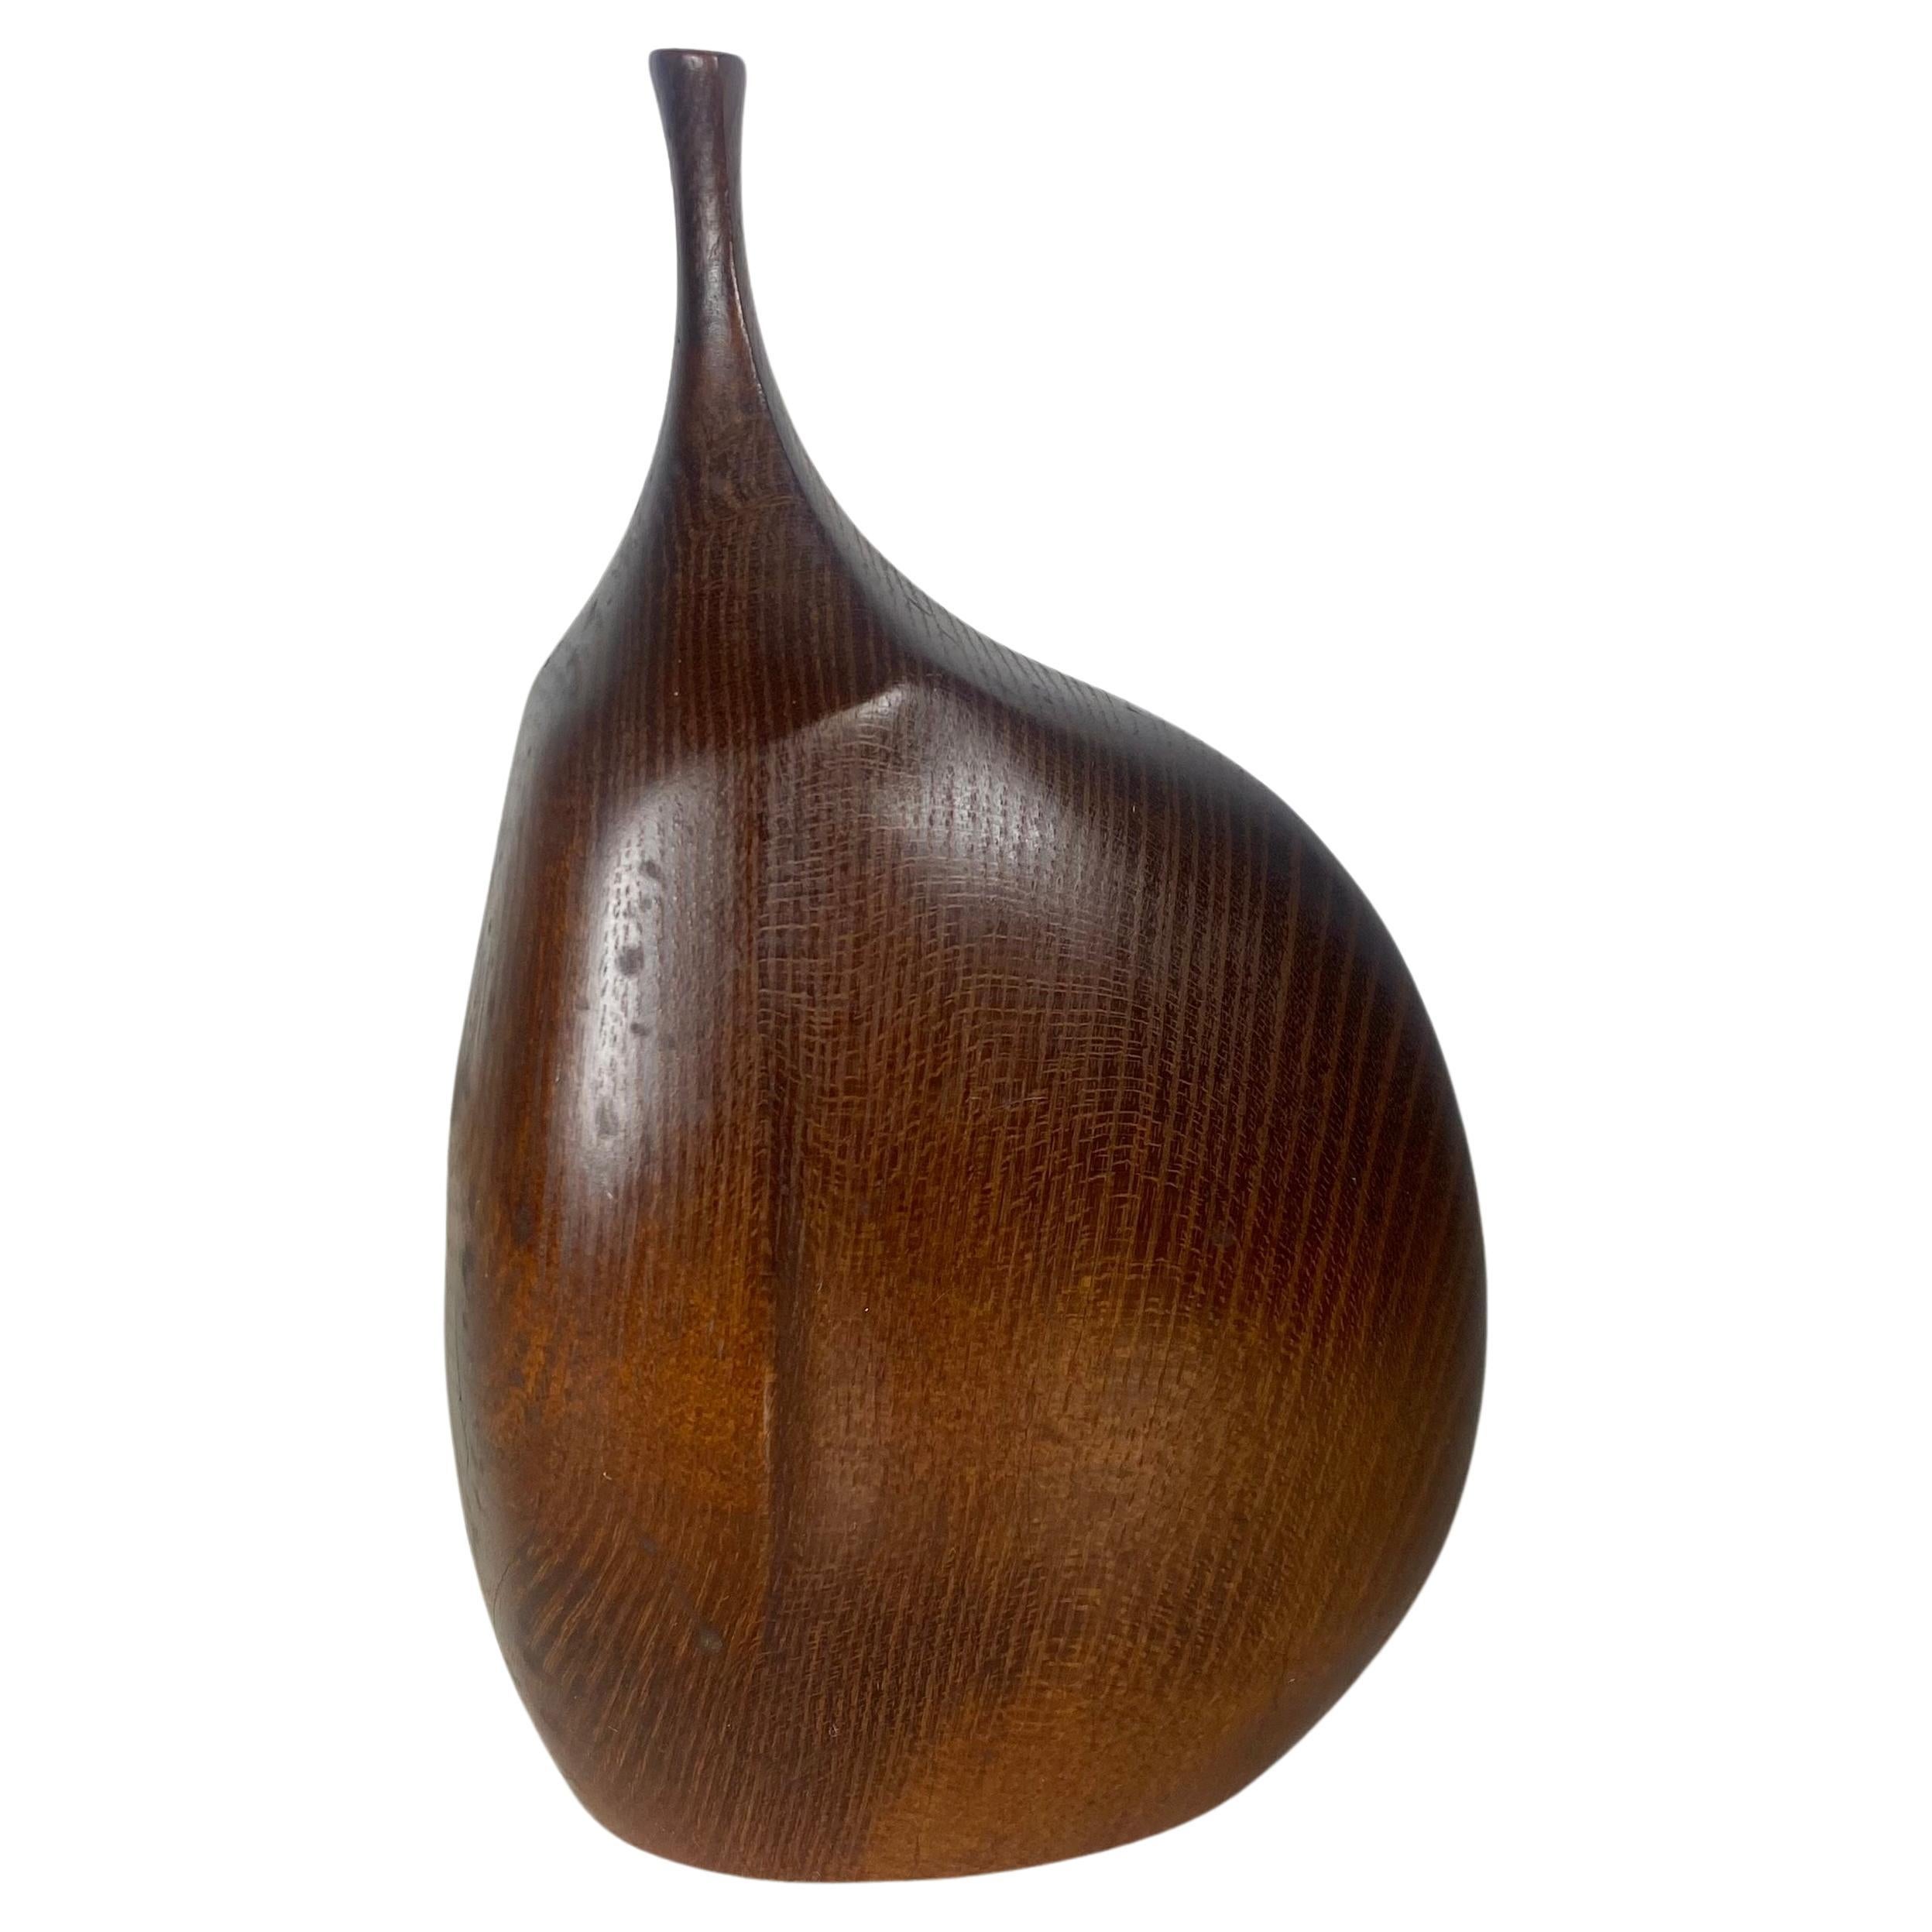 Vase biomorphe de Doug Ayers, designer artisan californien, vers 1960